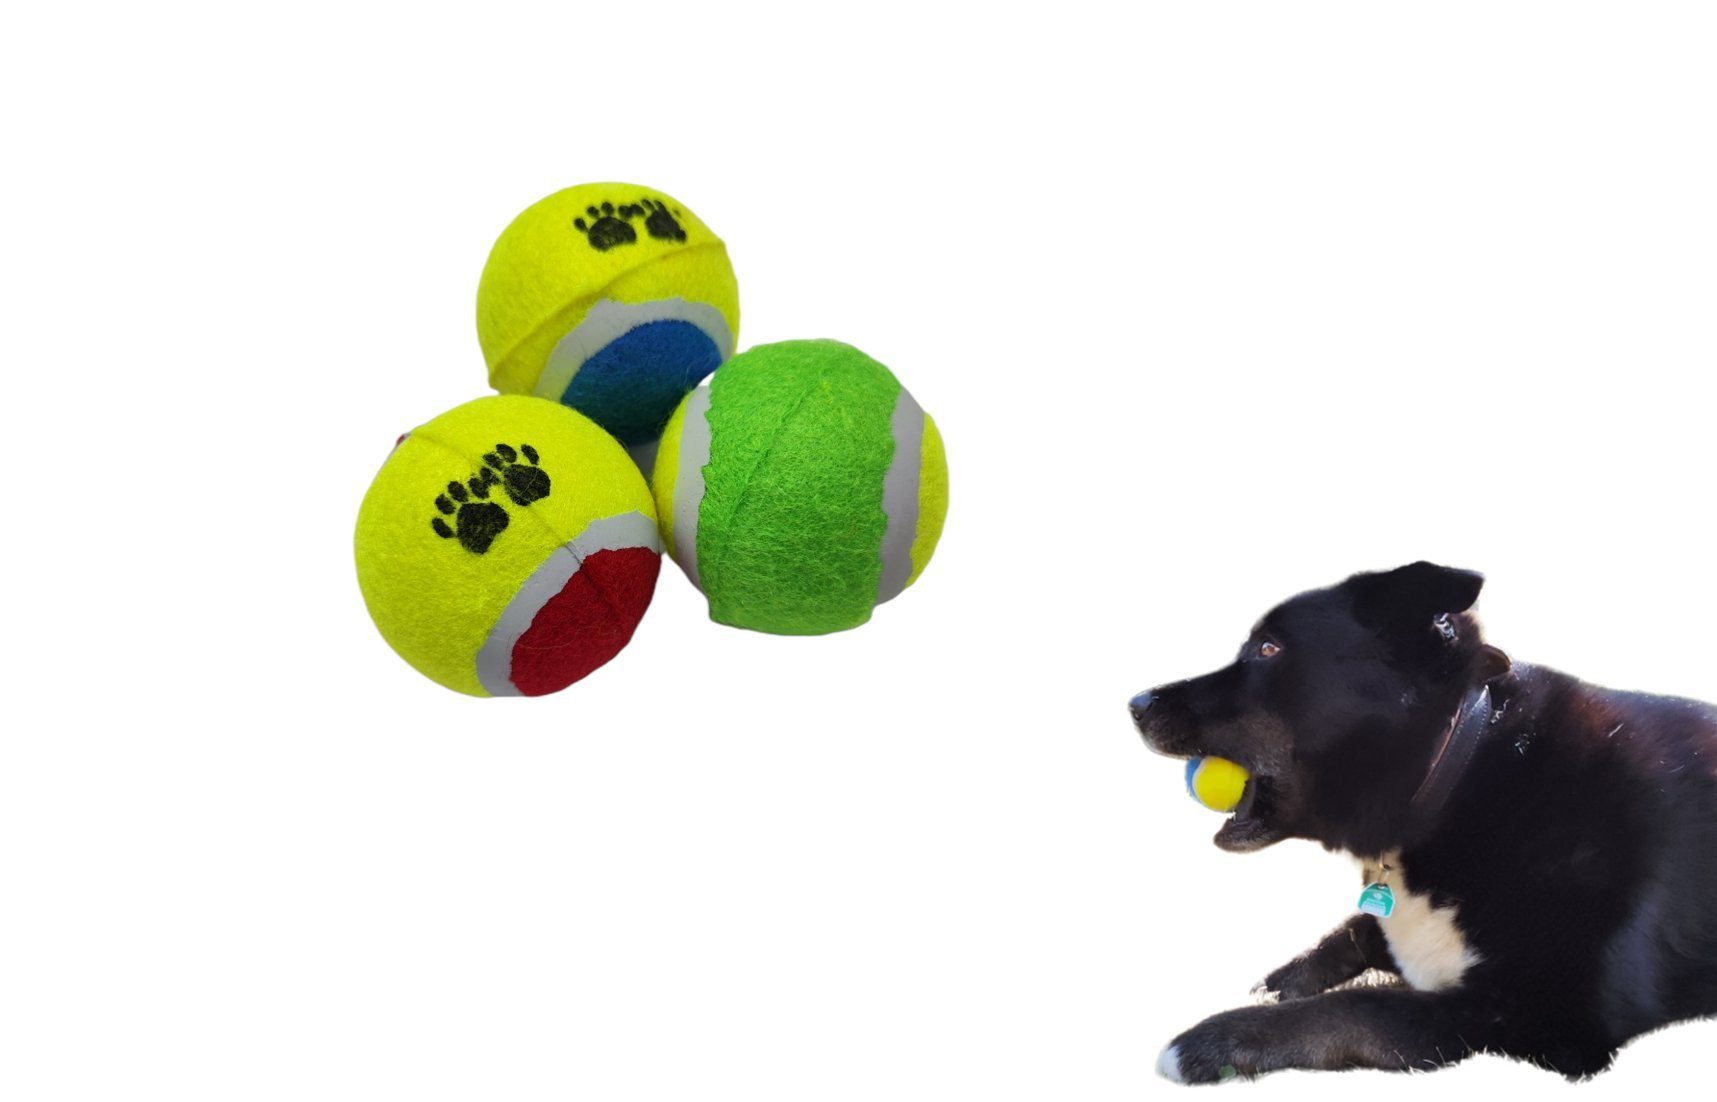 auffindbar HMH-Shop Tennisball Spaß Farben, Bälle Spielen bunt auffindbar, Farben Hund Tennisbälle Hundeball gut Ø 6 ~6,5cm gut Ausdauer Training Tierball Ball Toys Hundebälle Haustier Helle auspowern Dog Agility Katze Hundespielzeug Helle